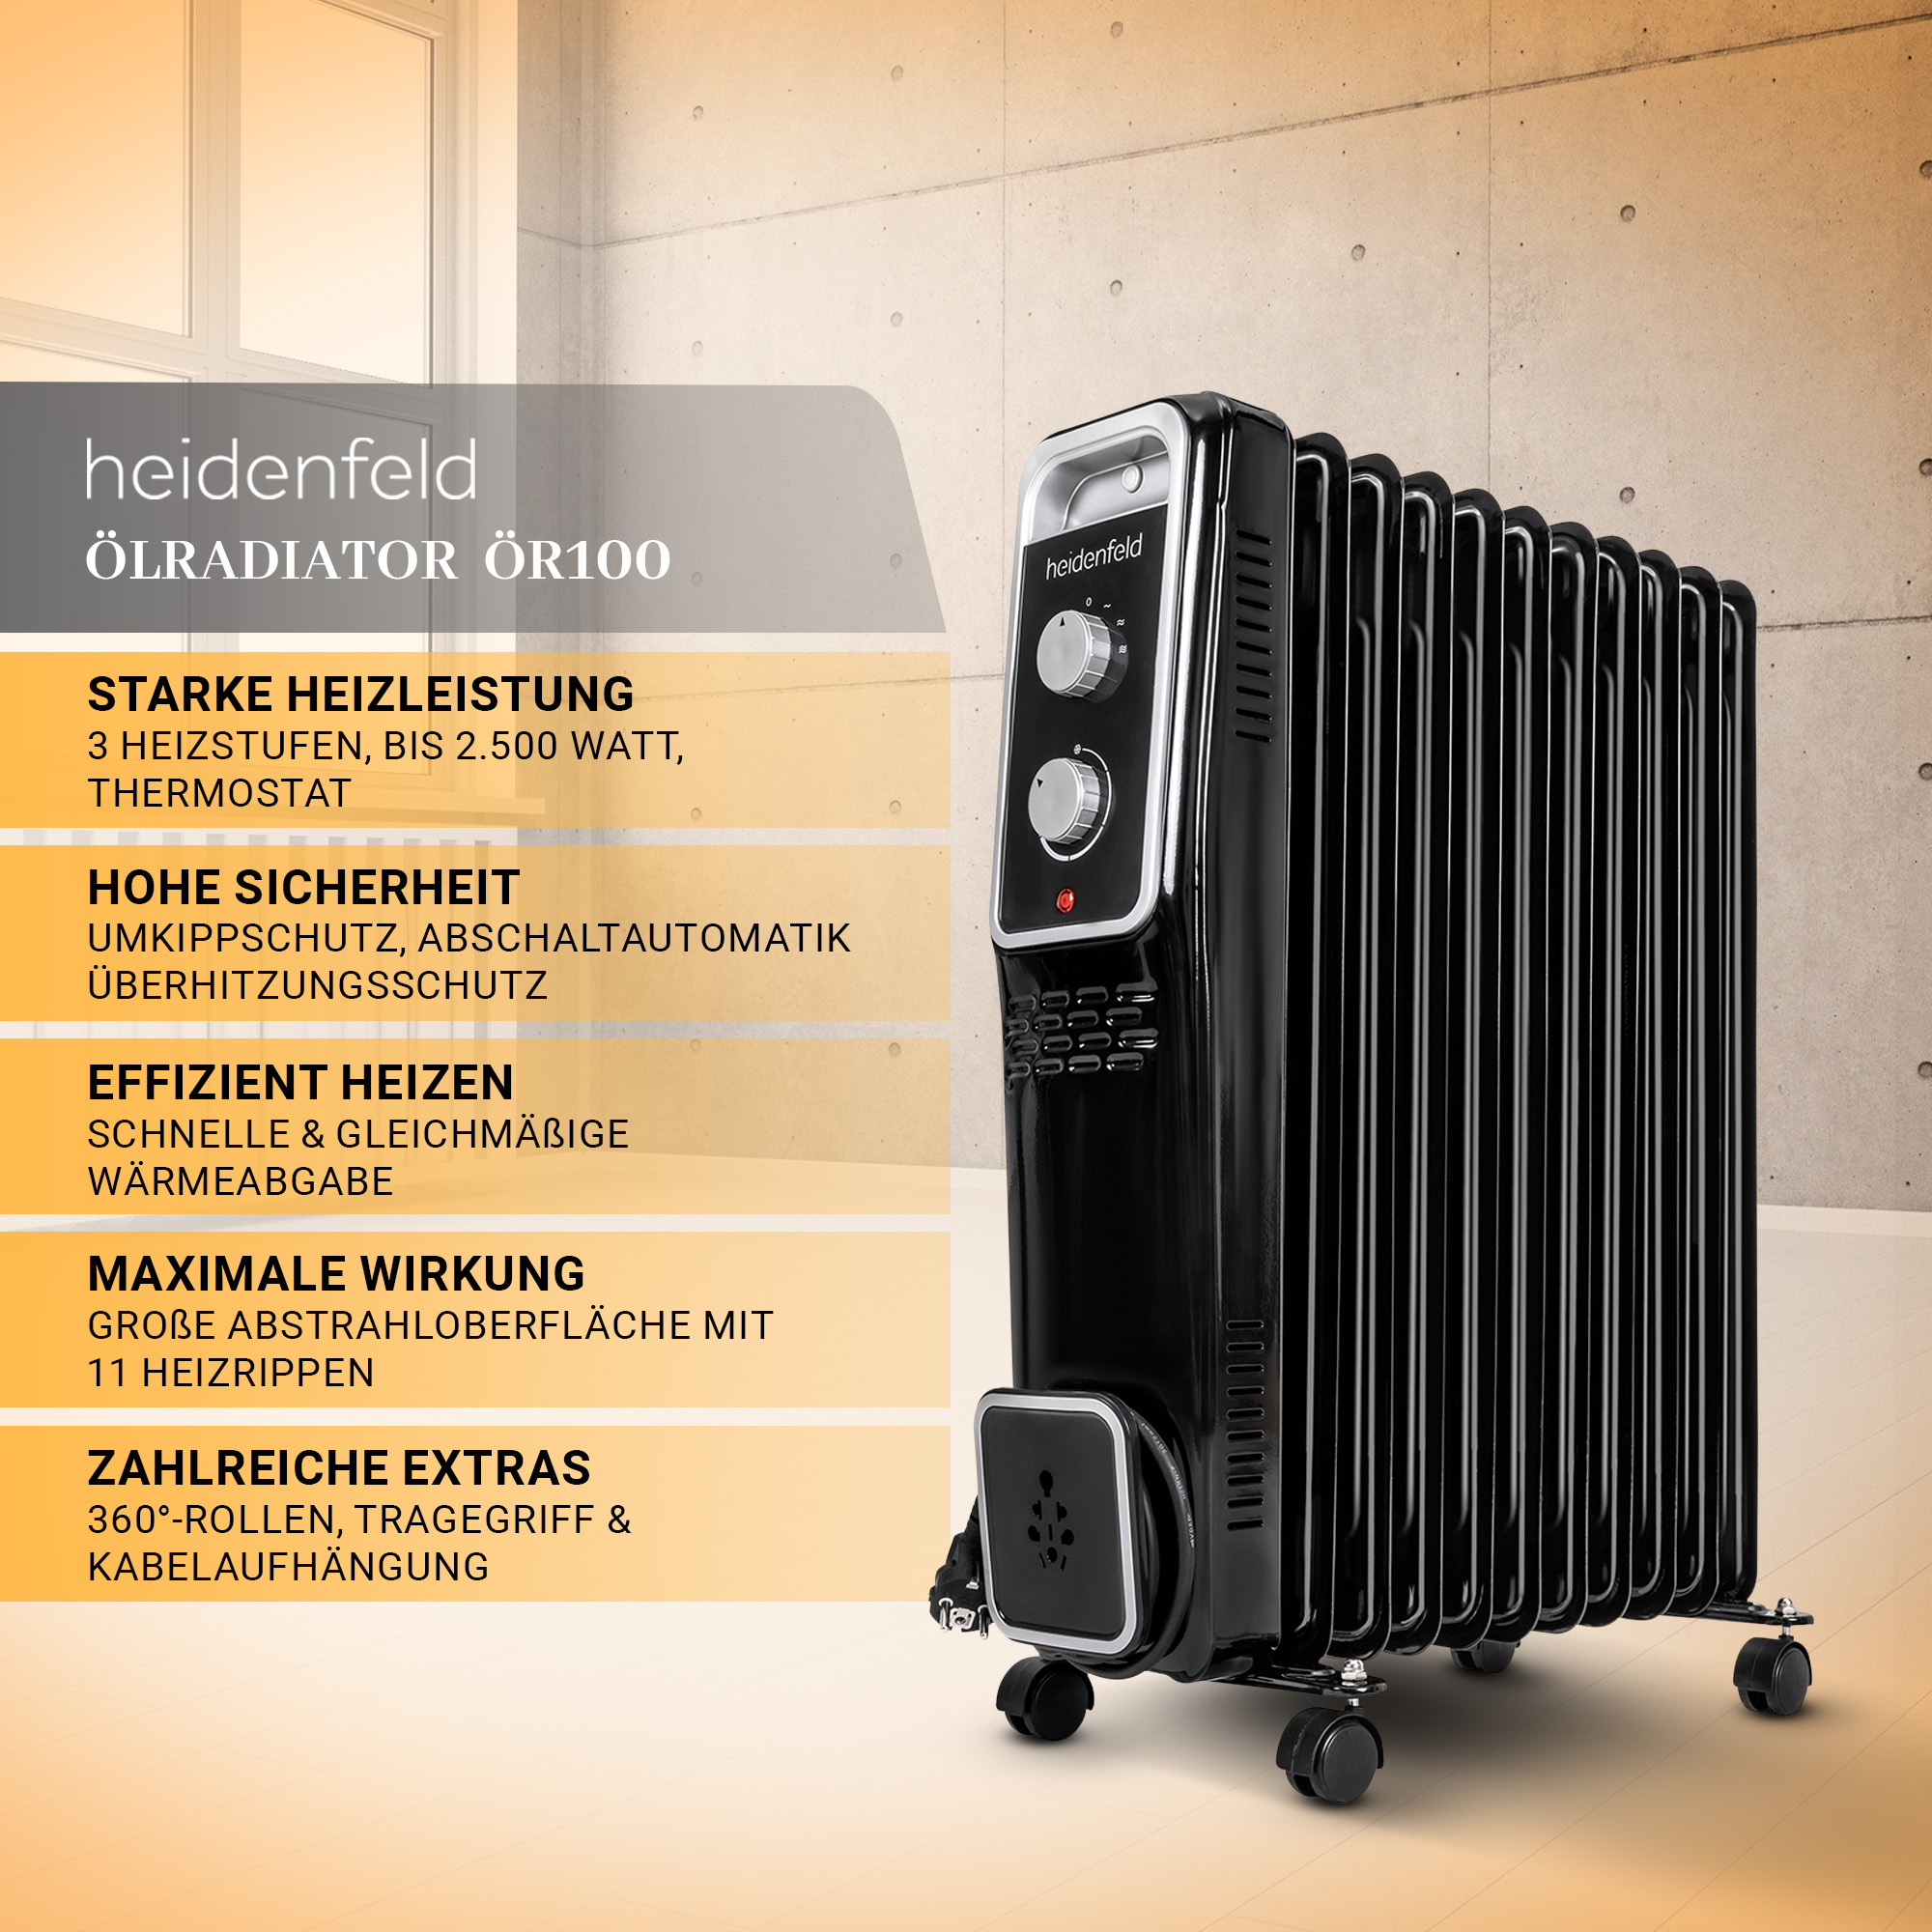 HEIDENFELD Heidenfeld Ölradiator ÖR100, Thermostat, 1000-2500 stufenweise Watt) Regulierung (2500 Watt, Ölradiator